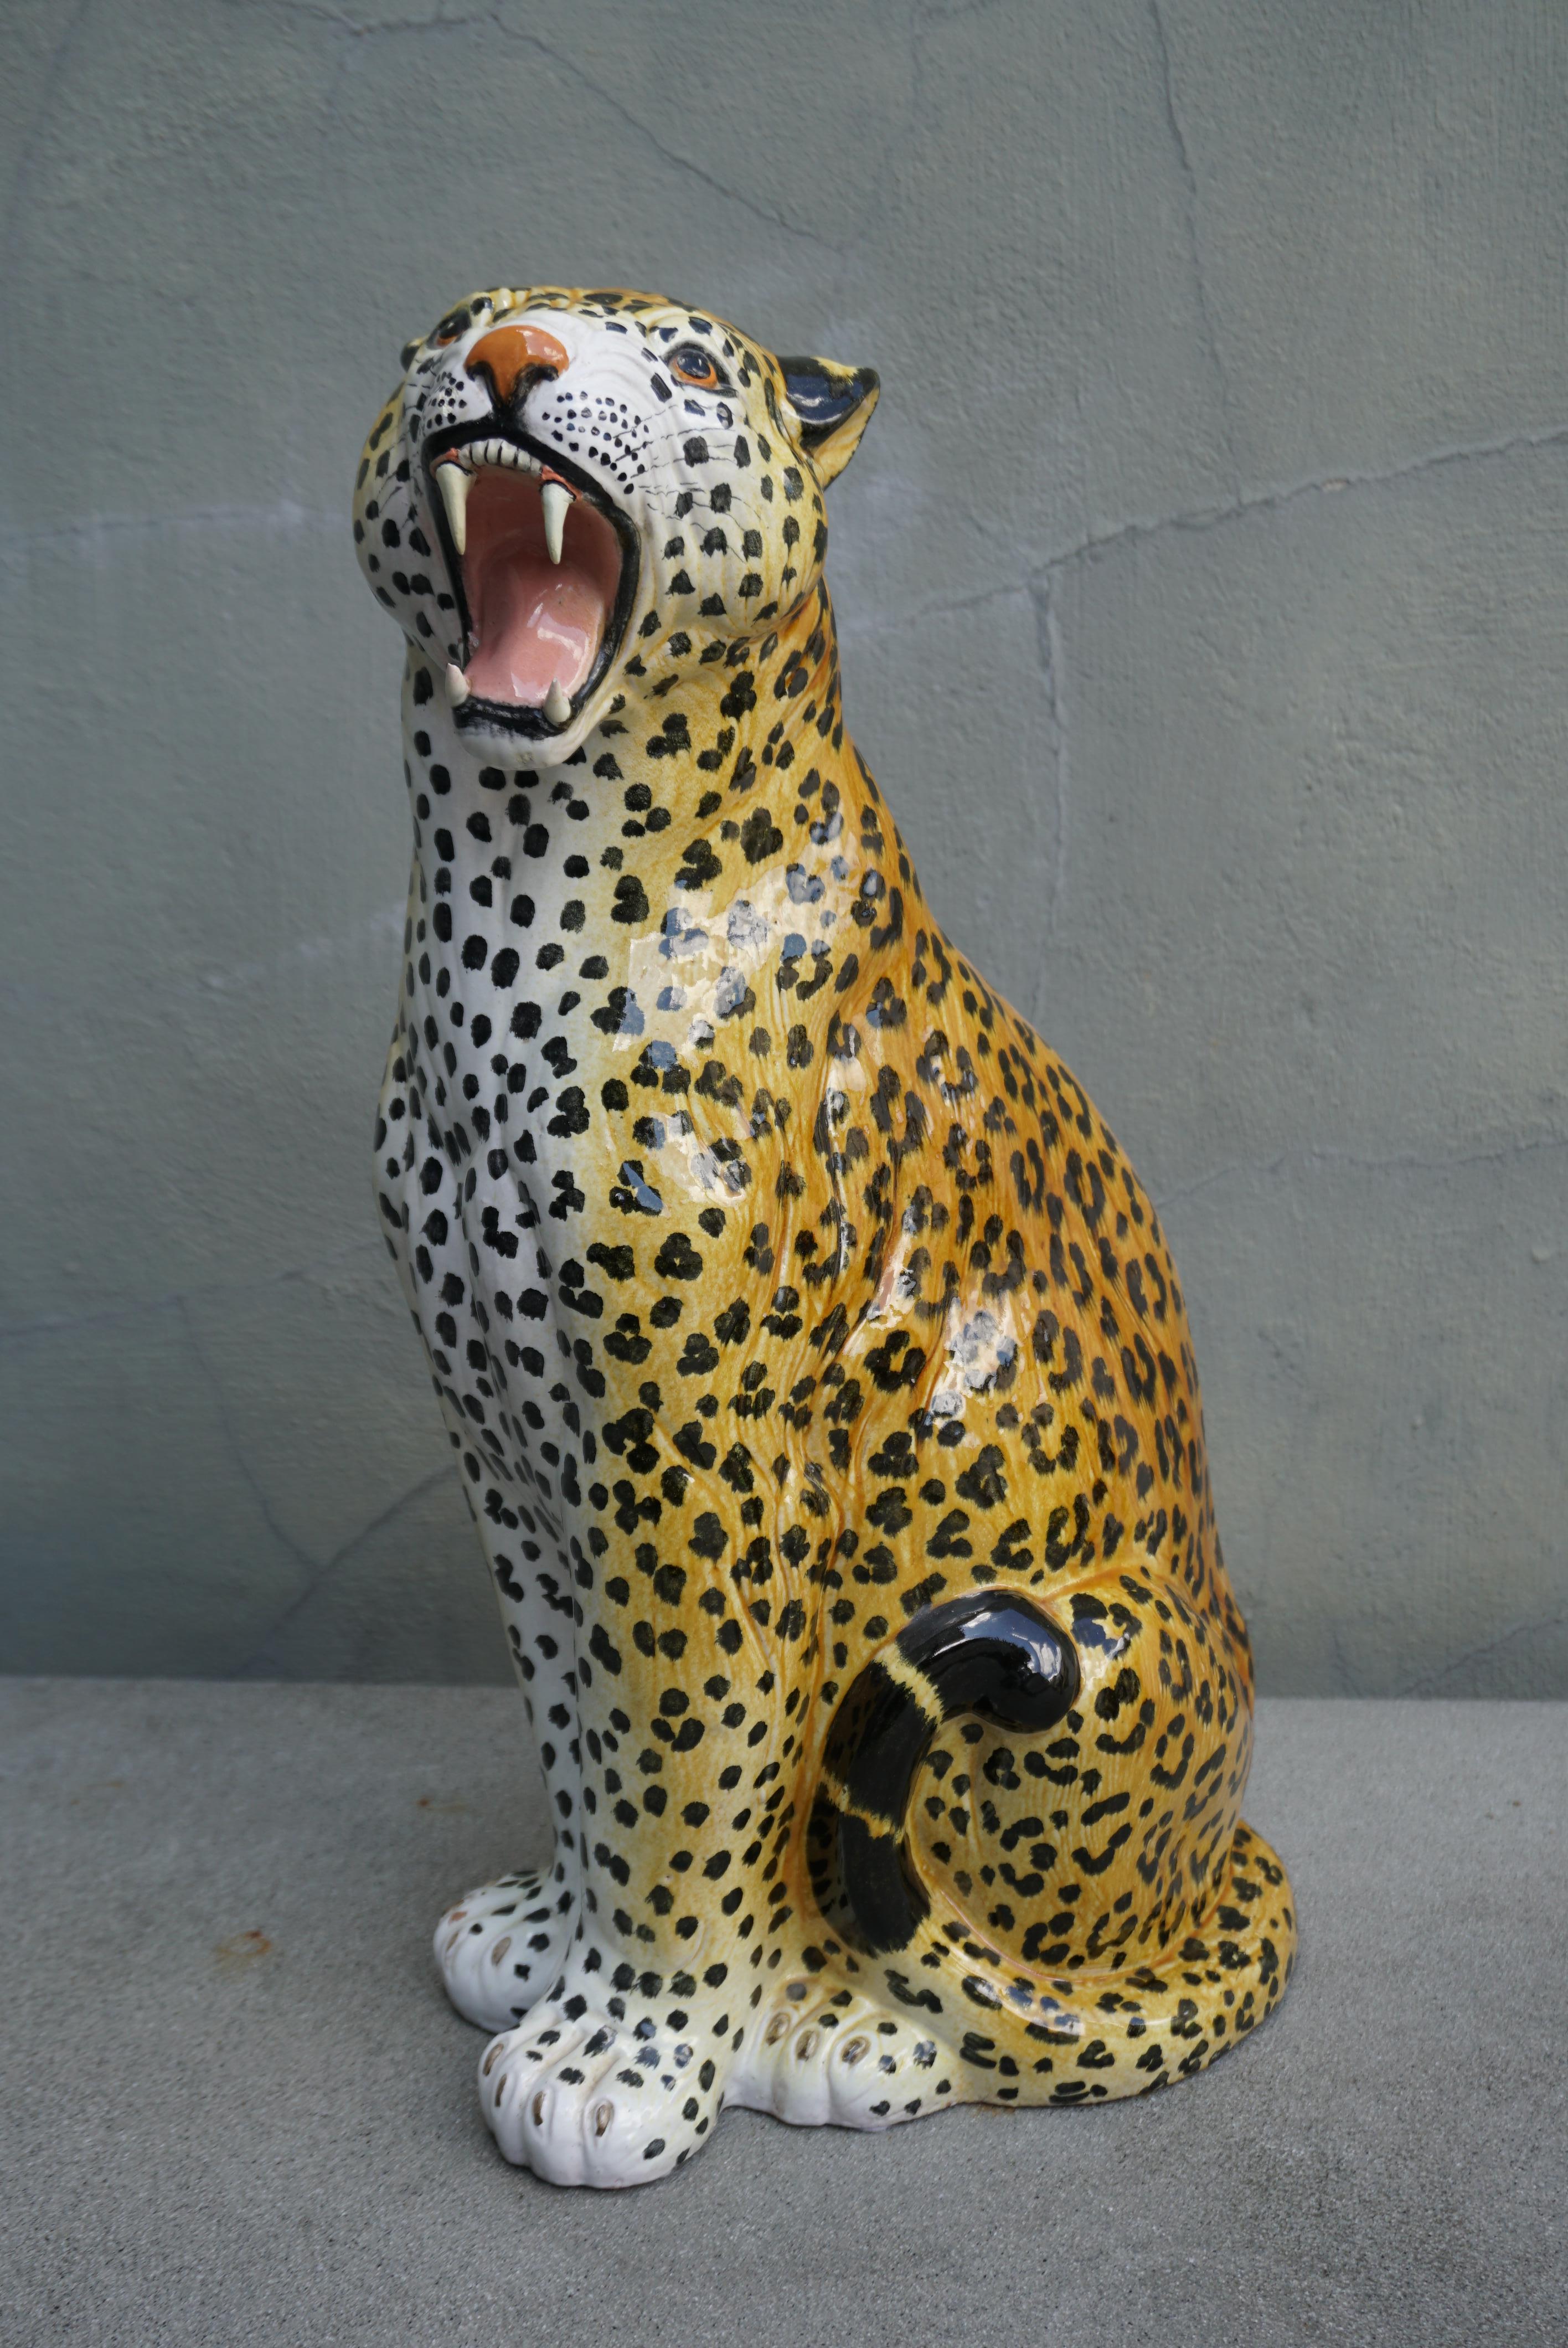 vintage cheetah statue